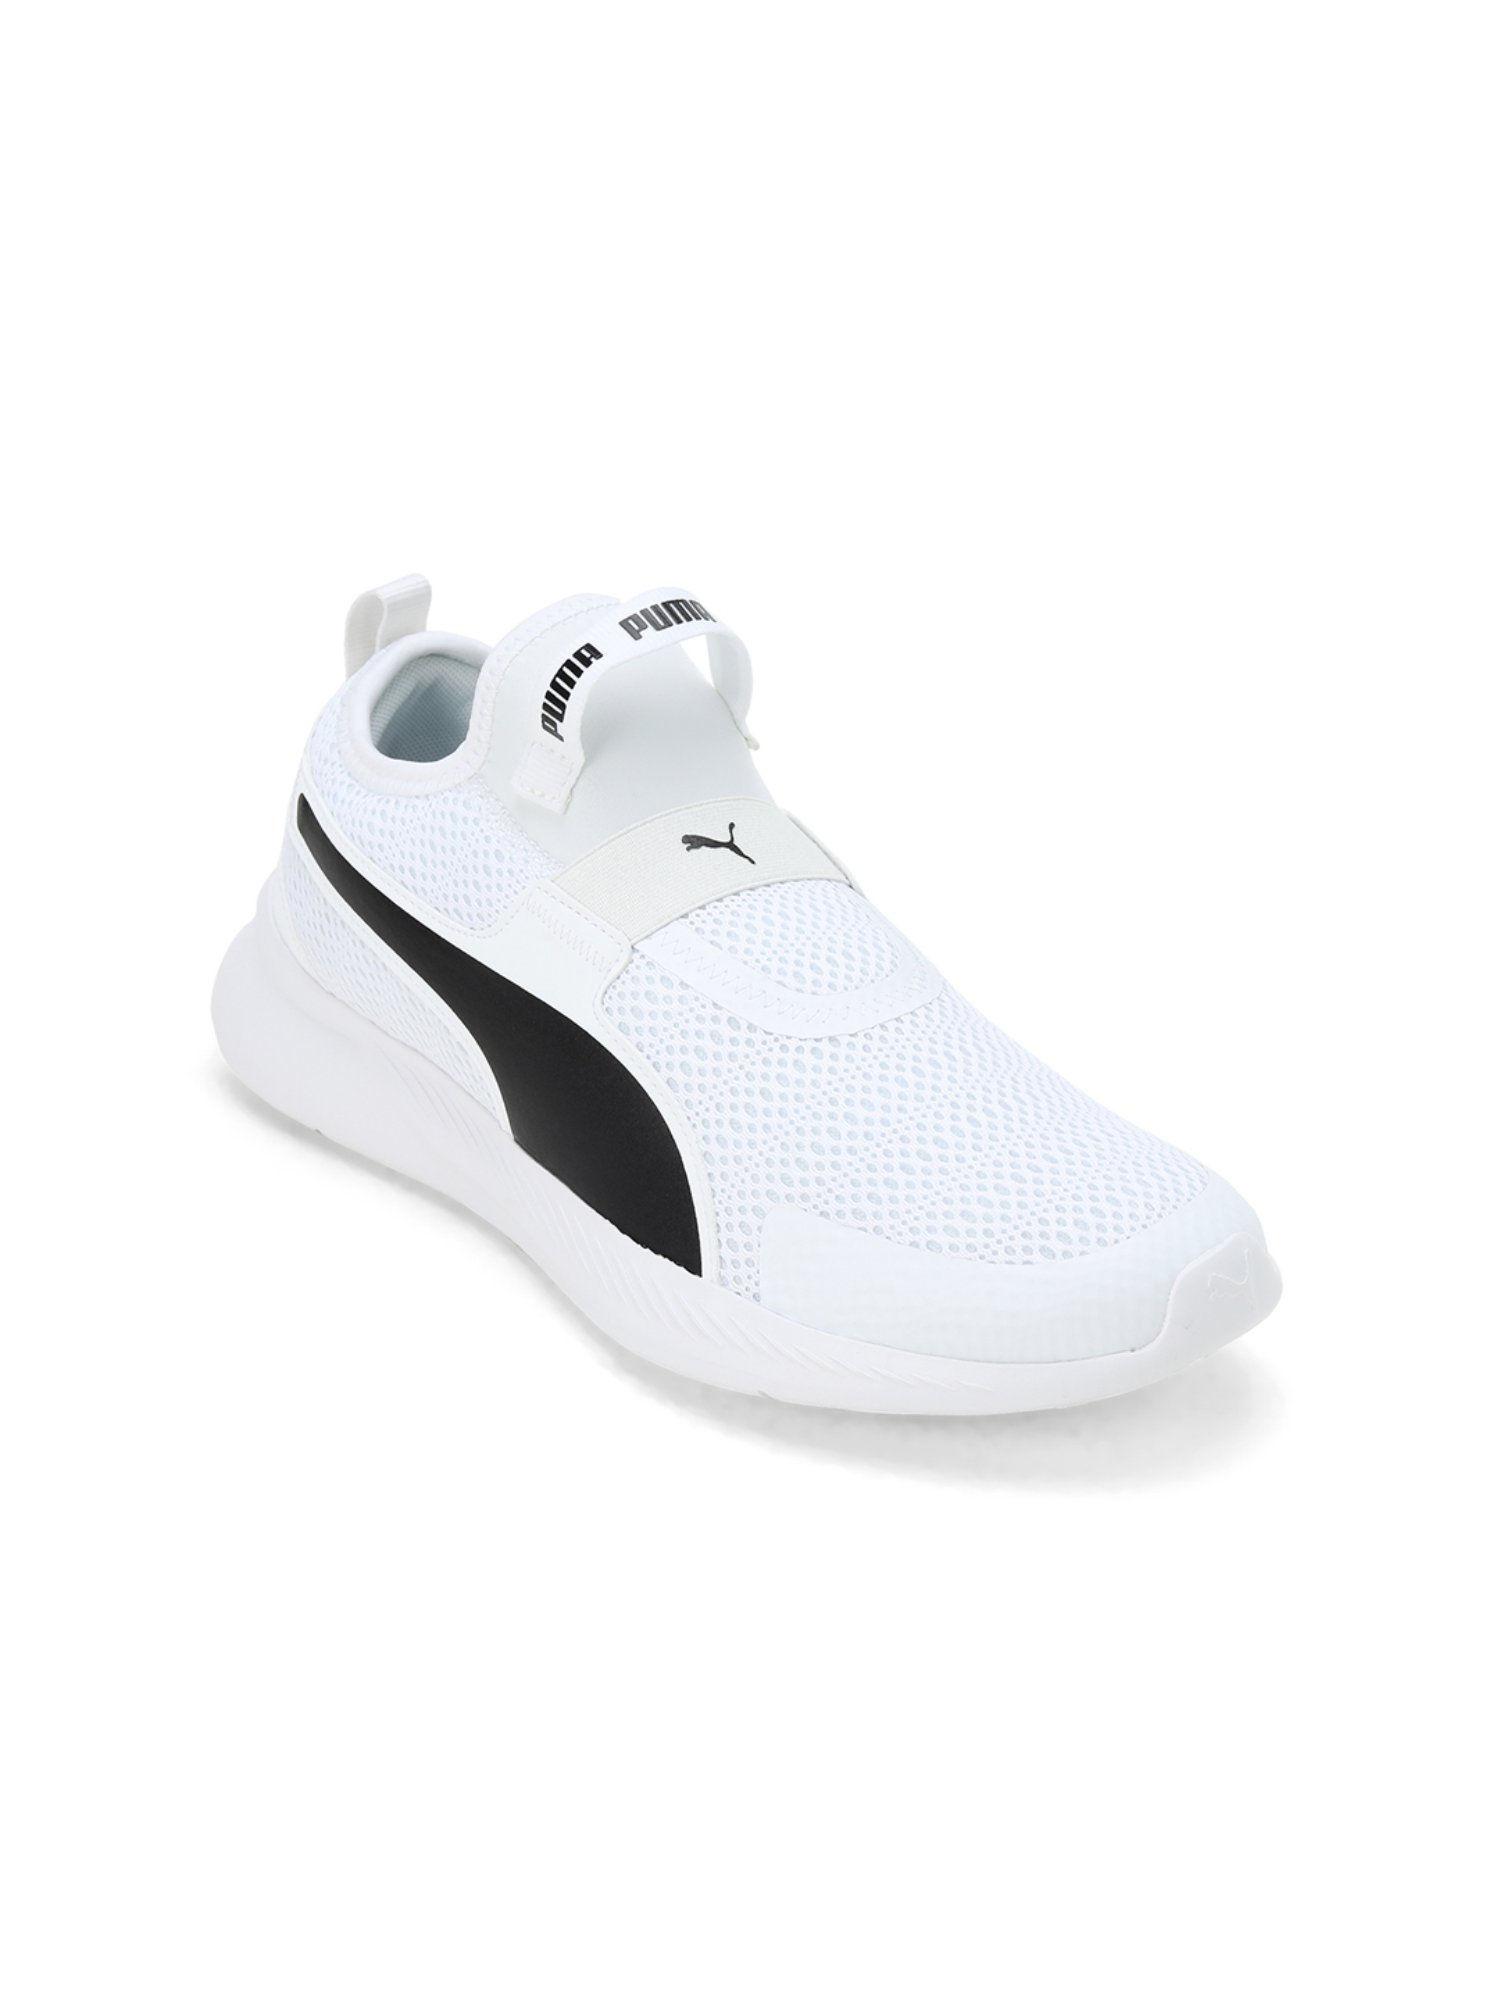 comfort-litewalk-men-white-sneakers